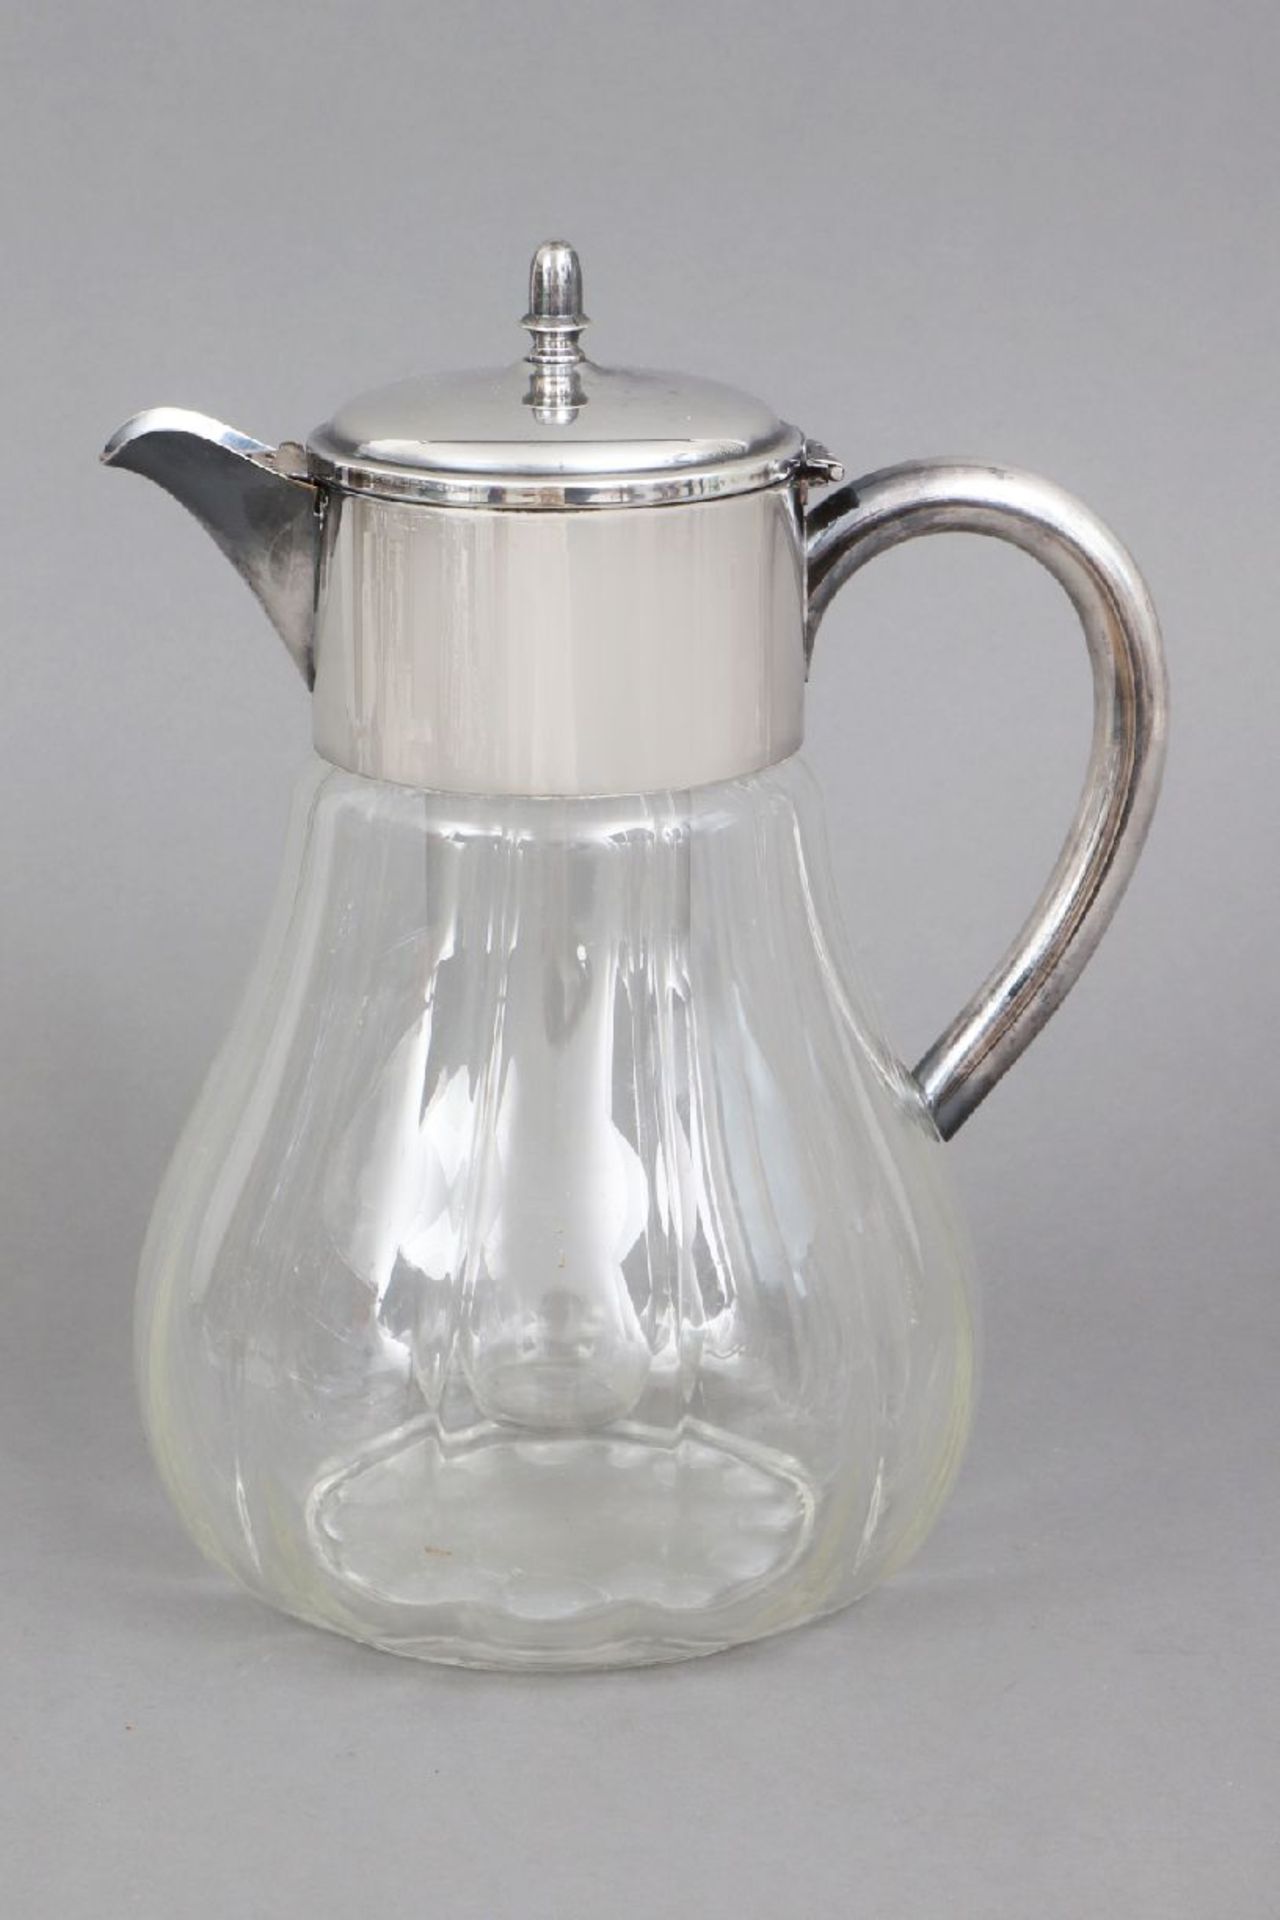 Bowlenkaraffe (¨Kalte Ente¨)Glas und versilbertes Metall, um 1930, tropfenförmiger Glas-Korpus mit